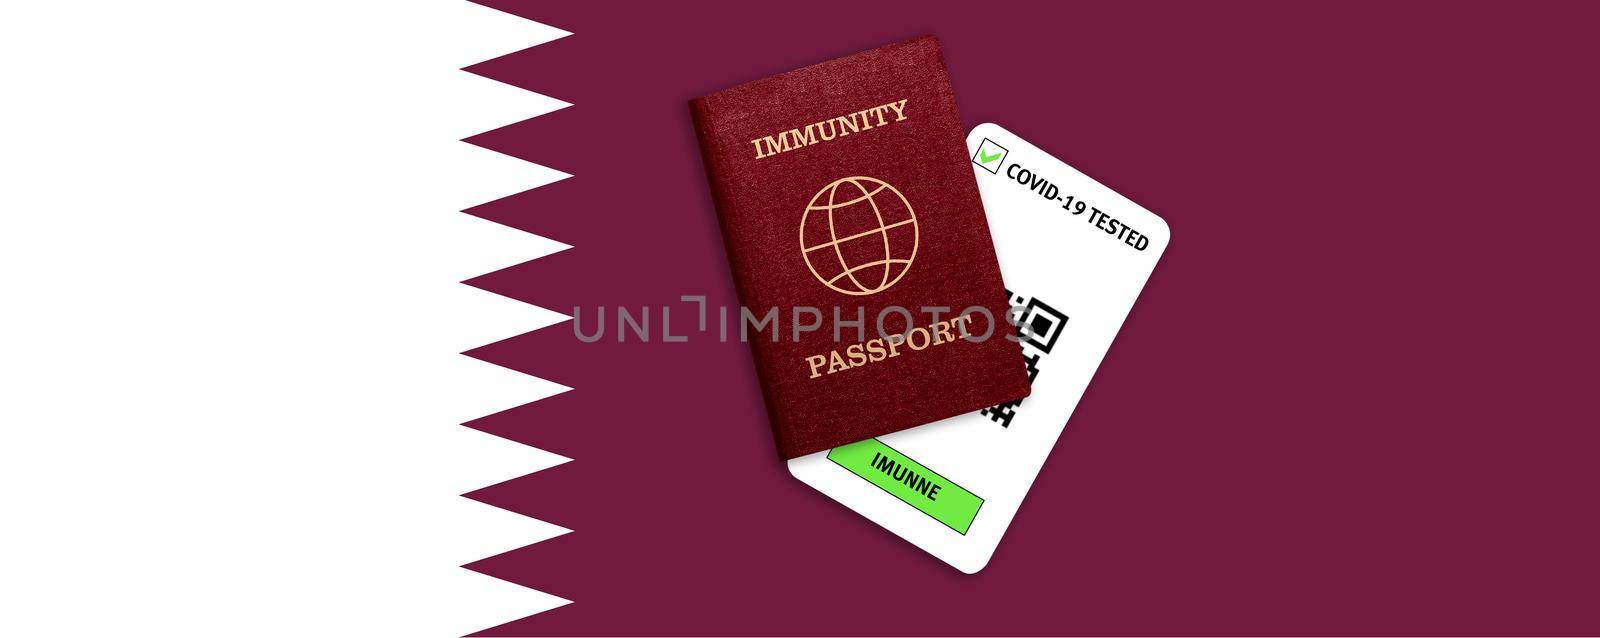 Immunity passport and test result for COVID-19 on flag of Qatar by galinasharapova